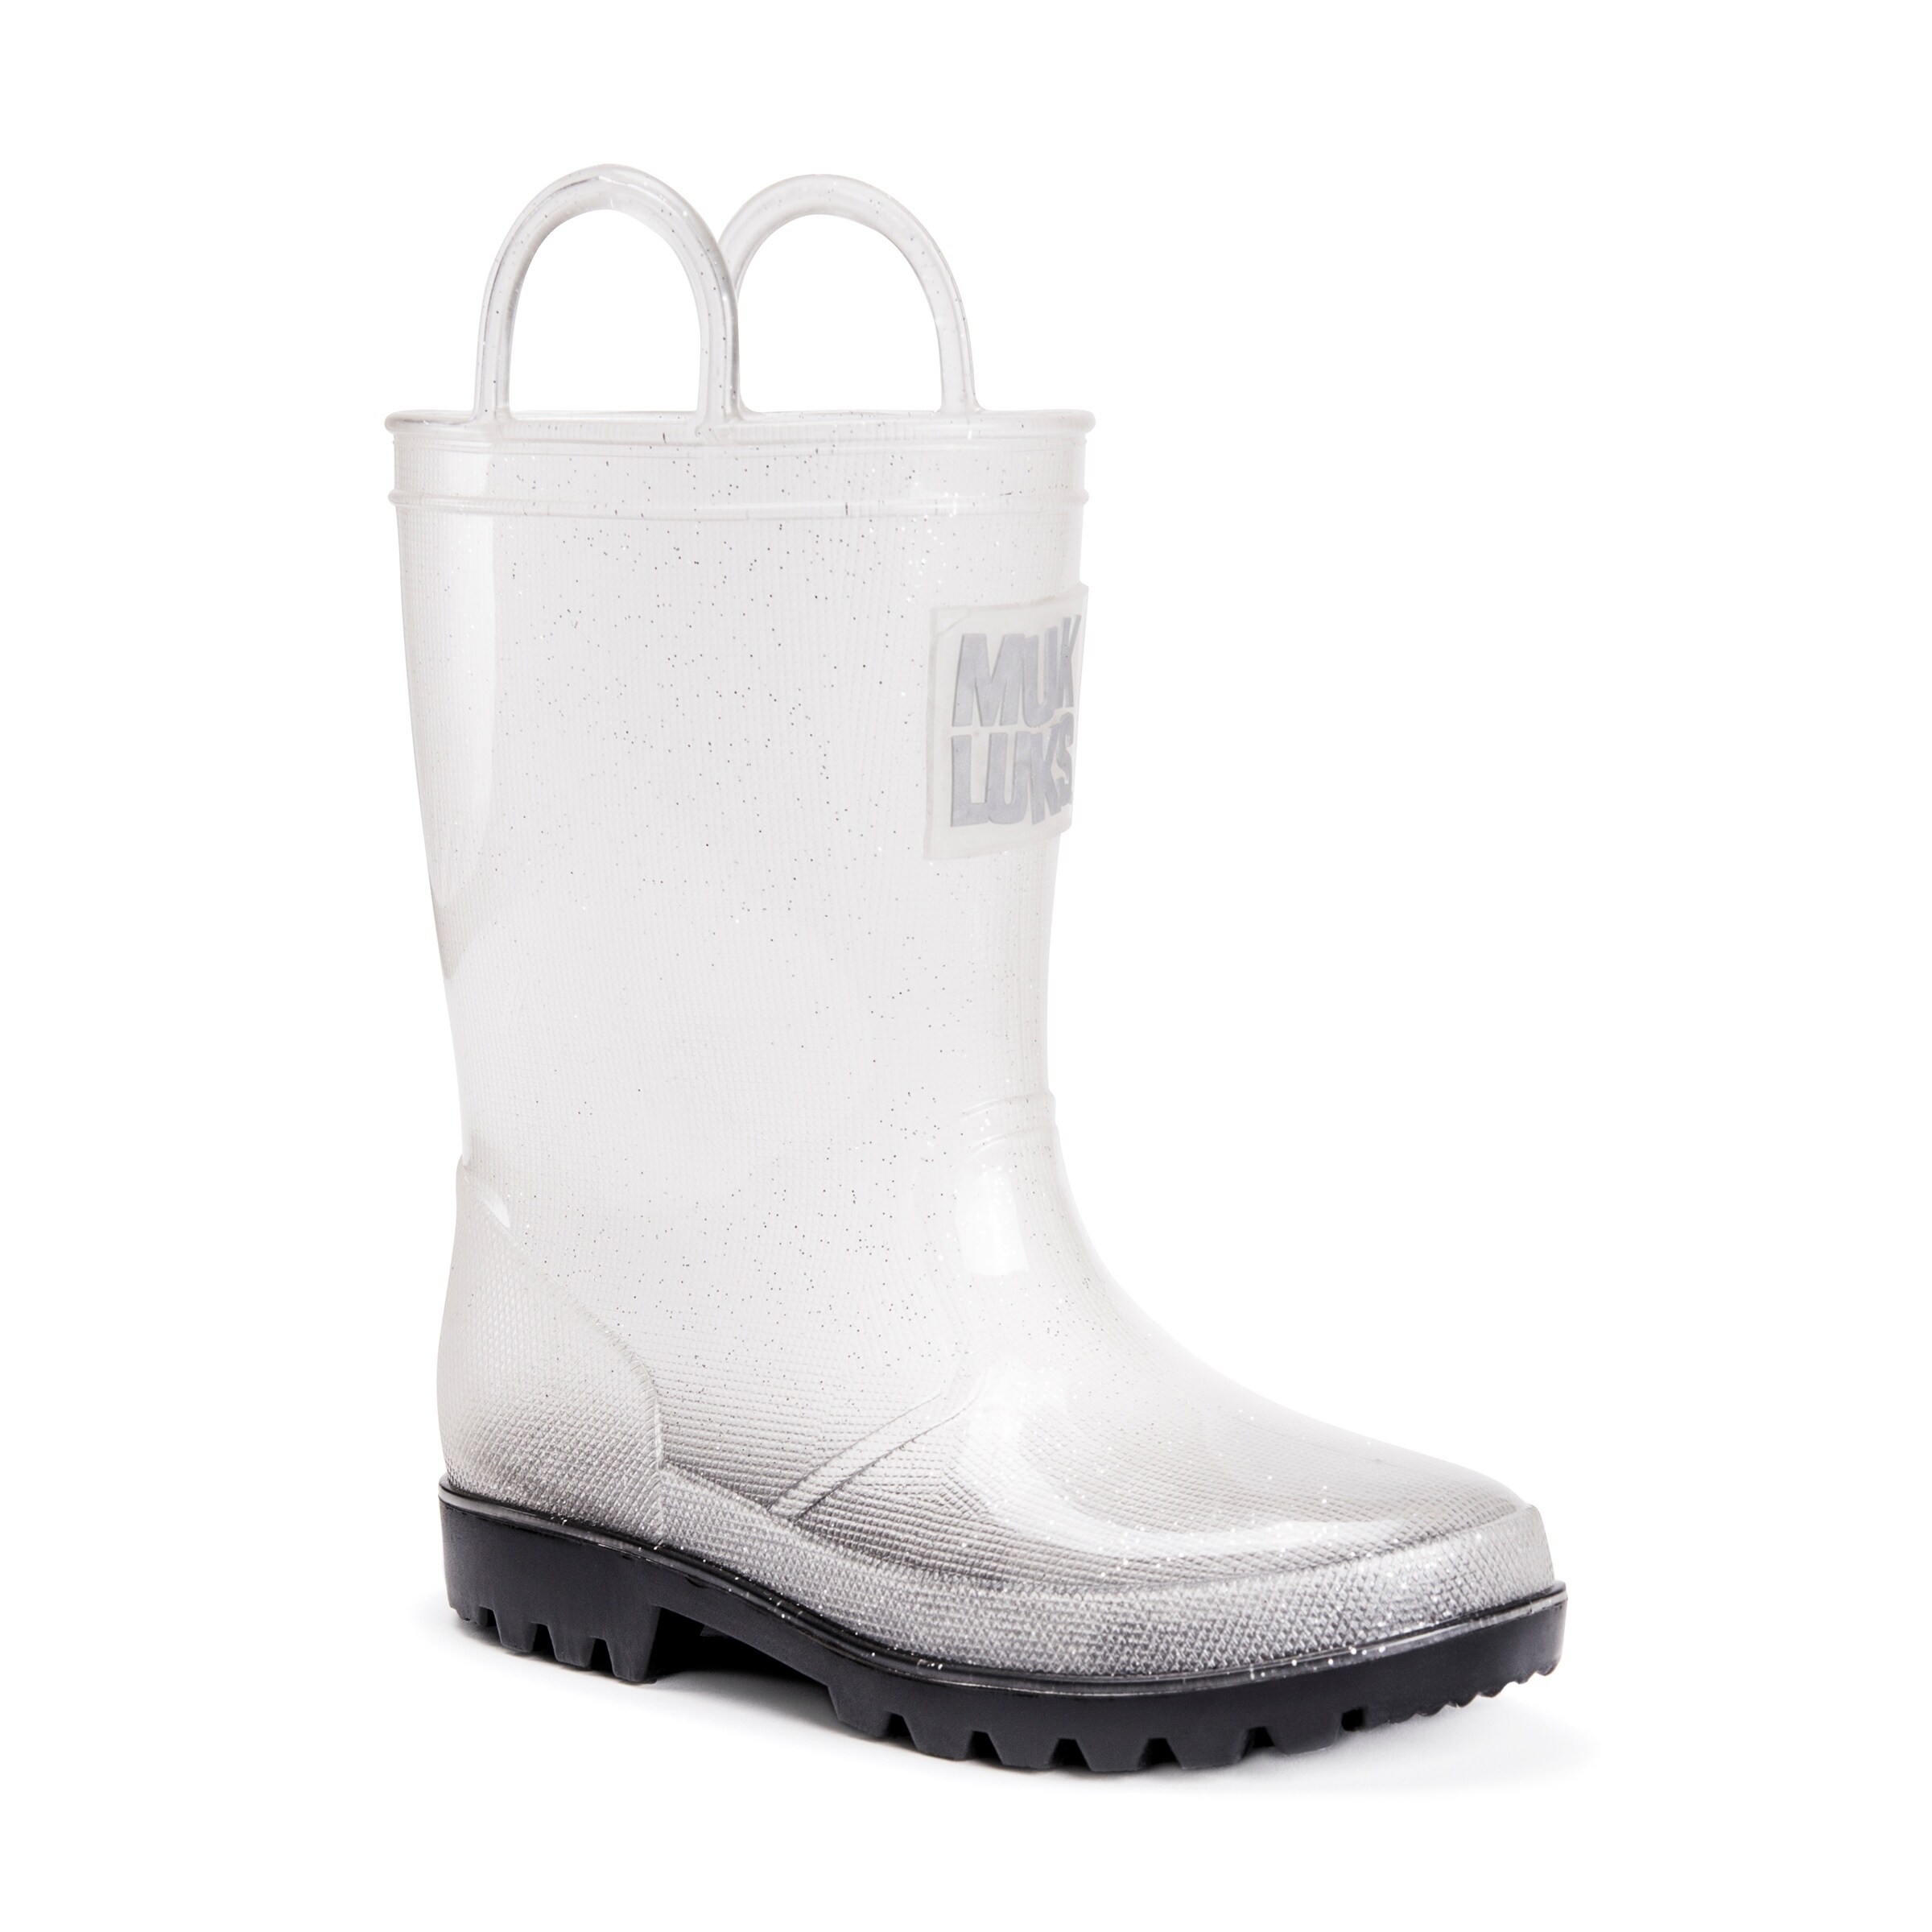 muk luk rain boots